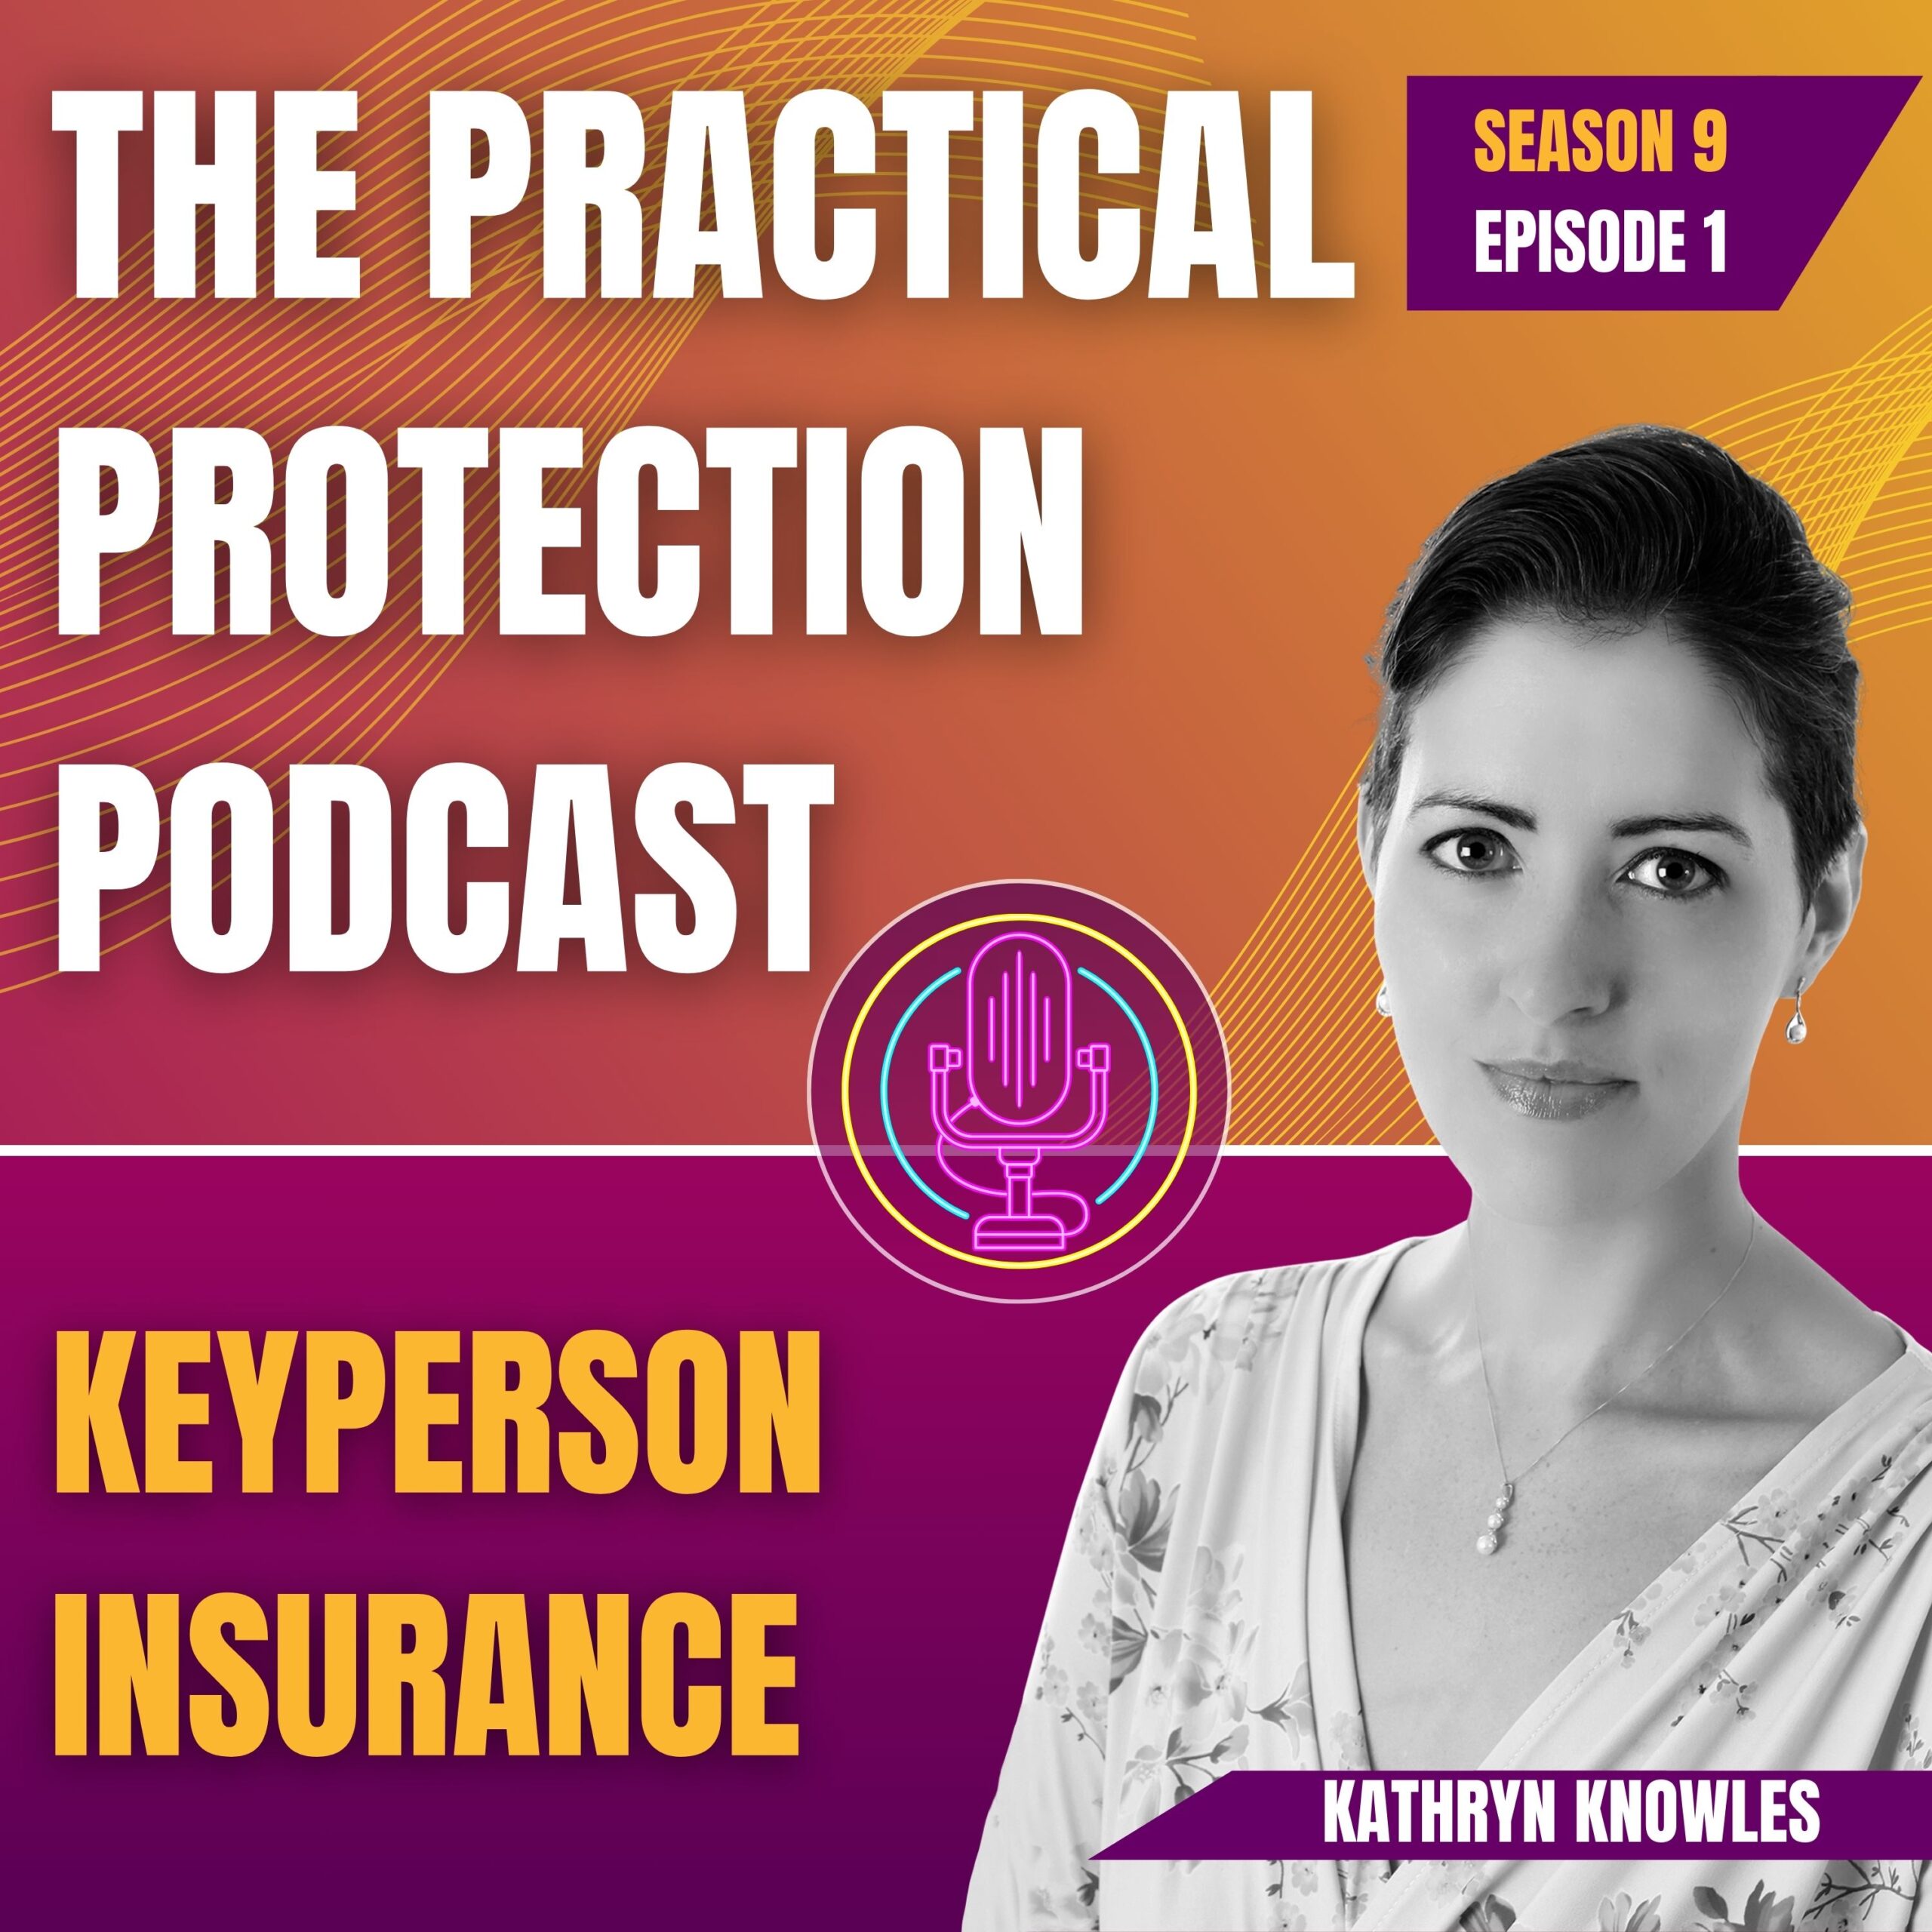 Keyperson Insurance. Kathryn Knowles.